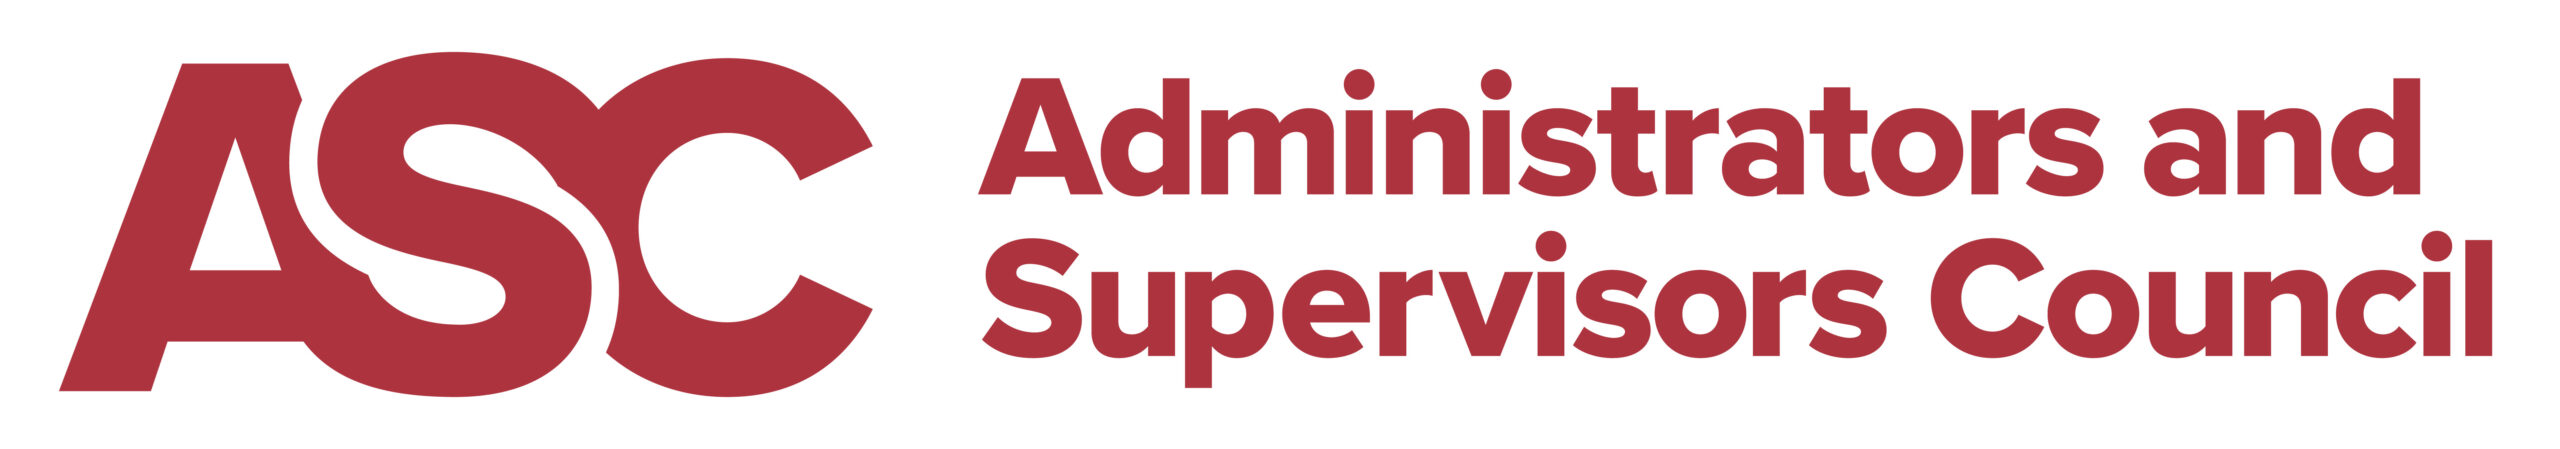 Administrative Supervisors Council